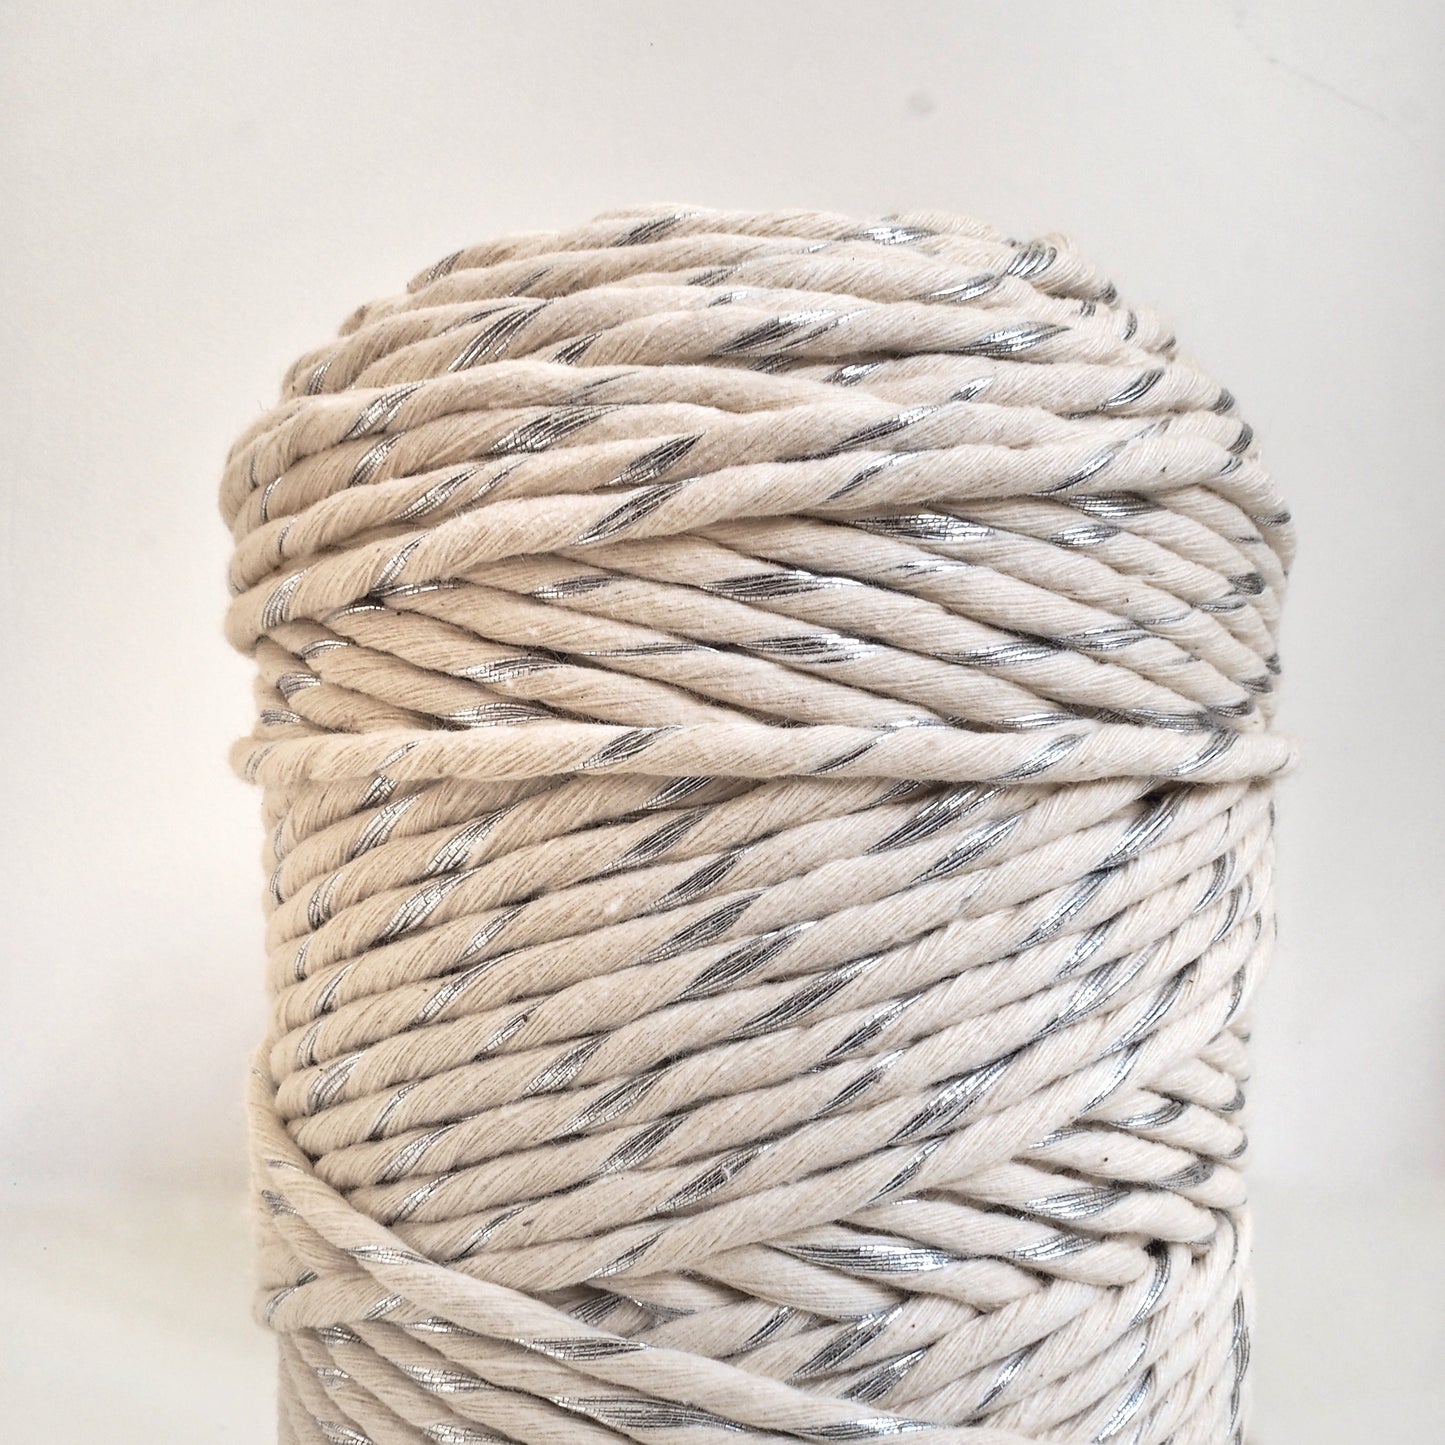 Metallic cotton string. The Joyful Studio